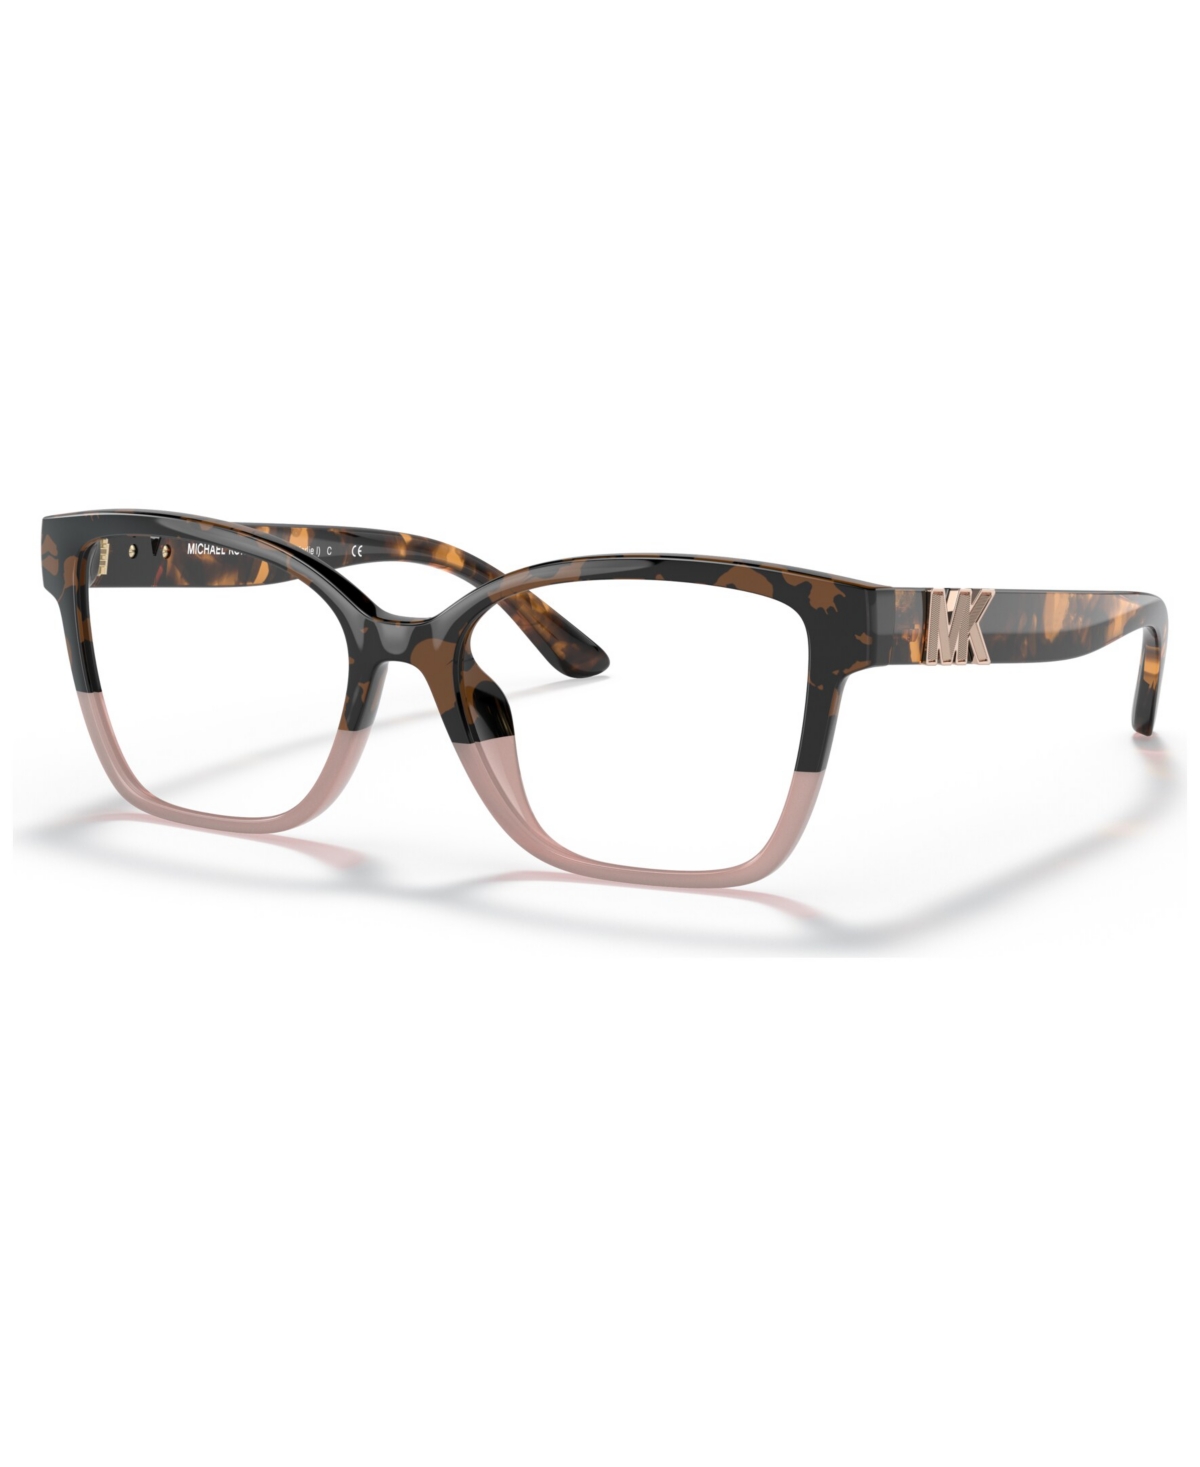 Women's Square Eyeglasses, MK4094U53-o - Tortoise